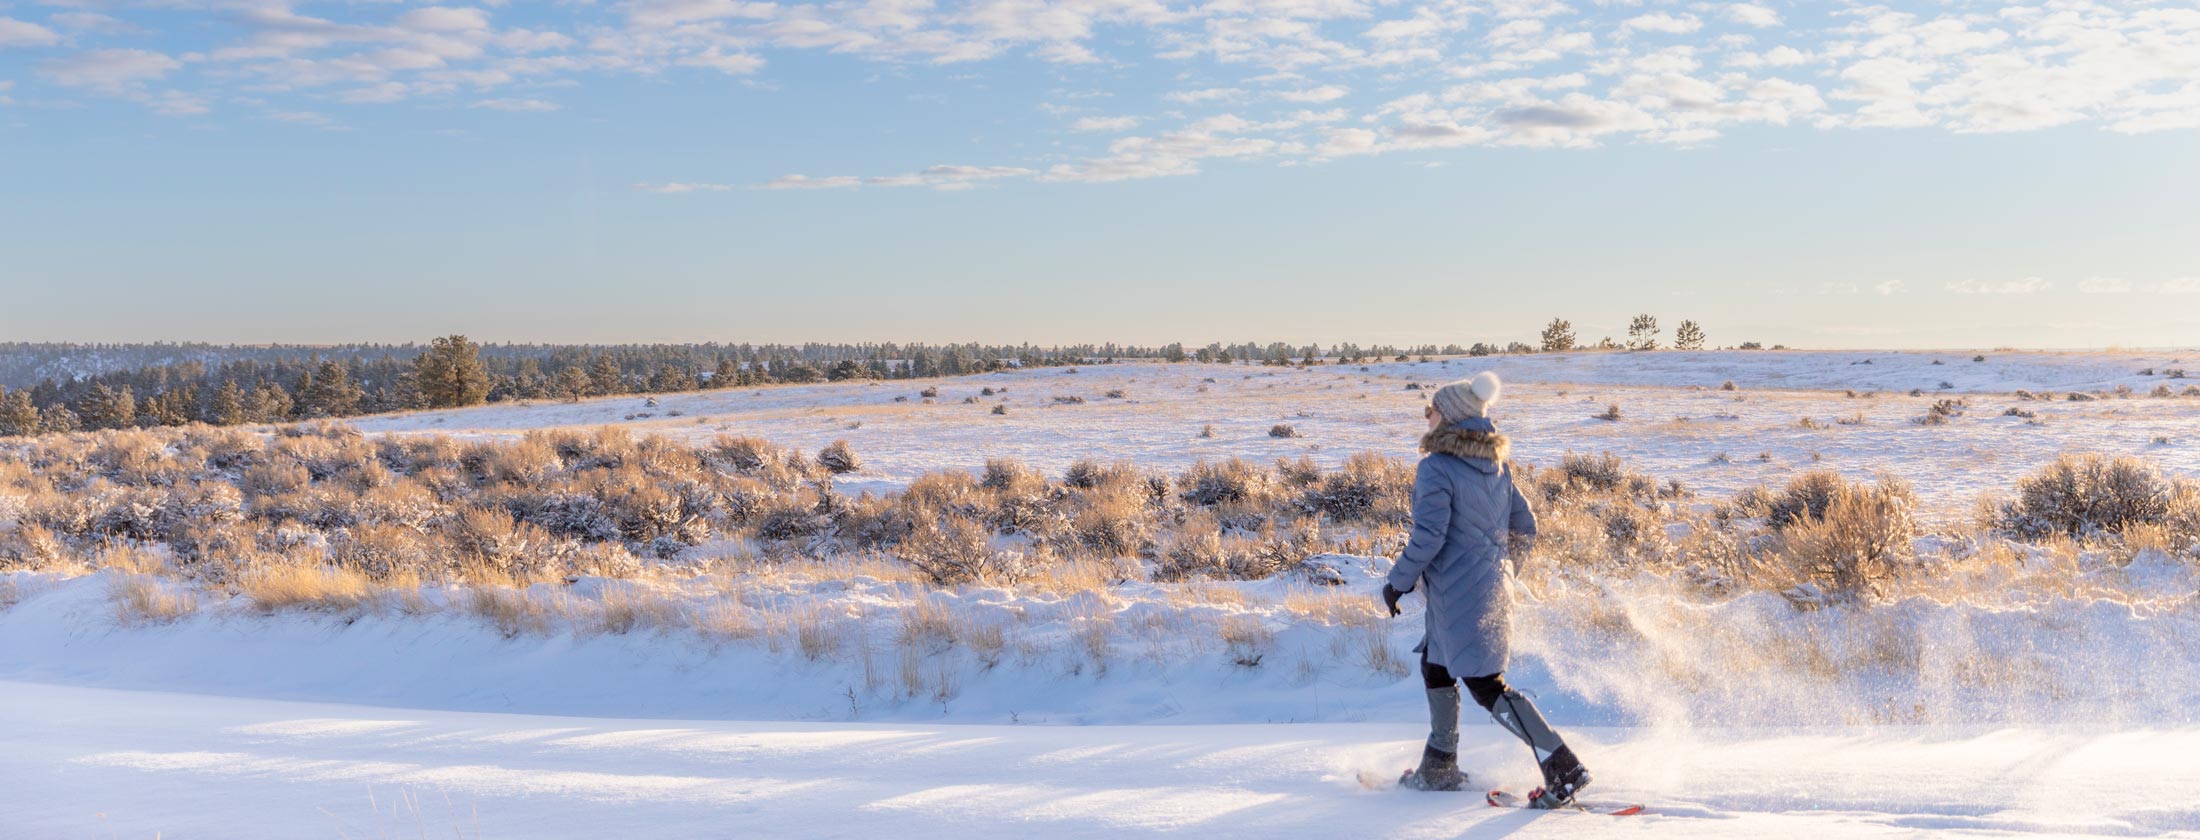 5 Best Winter Activities to Do in Southeast Montana